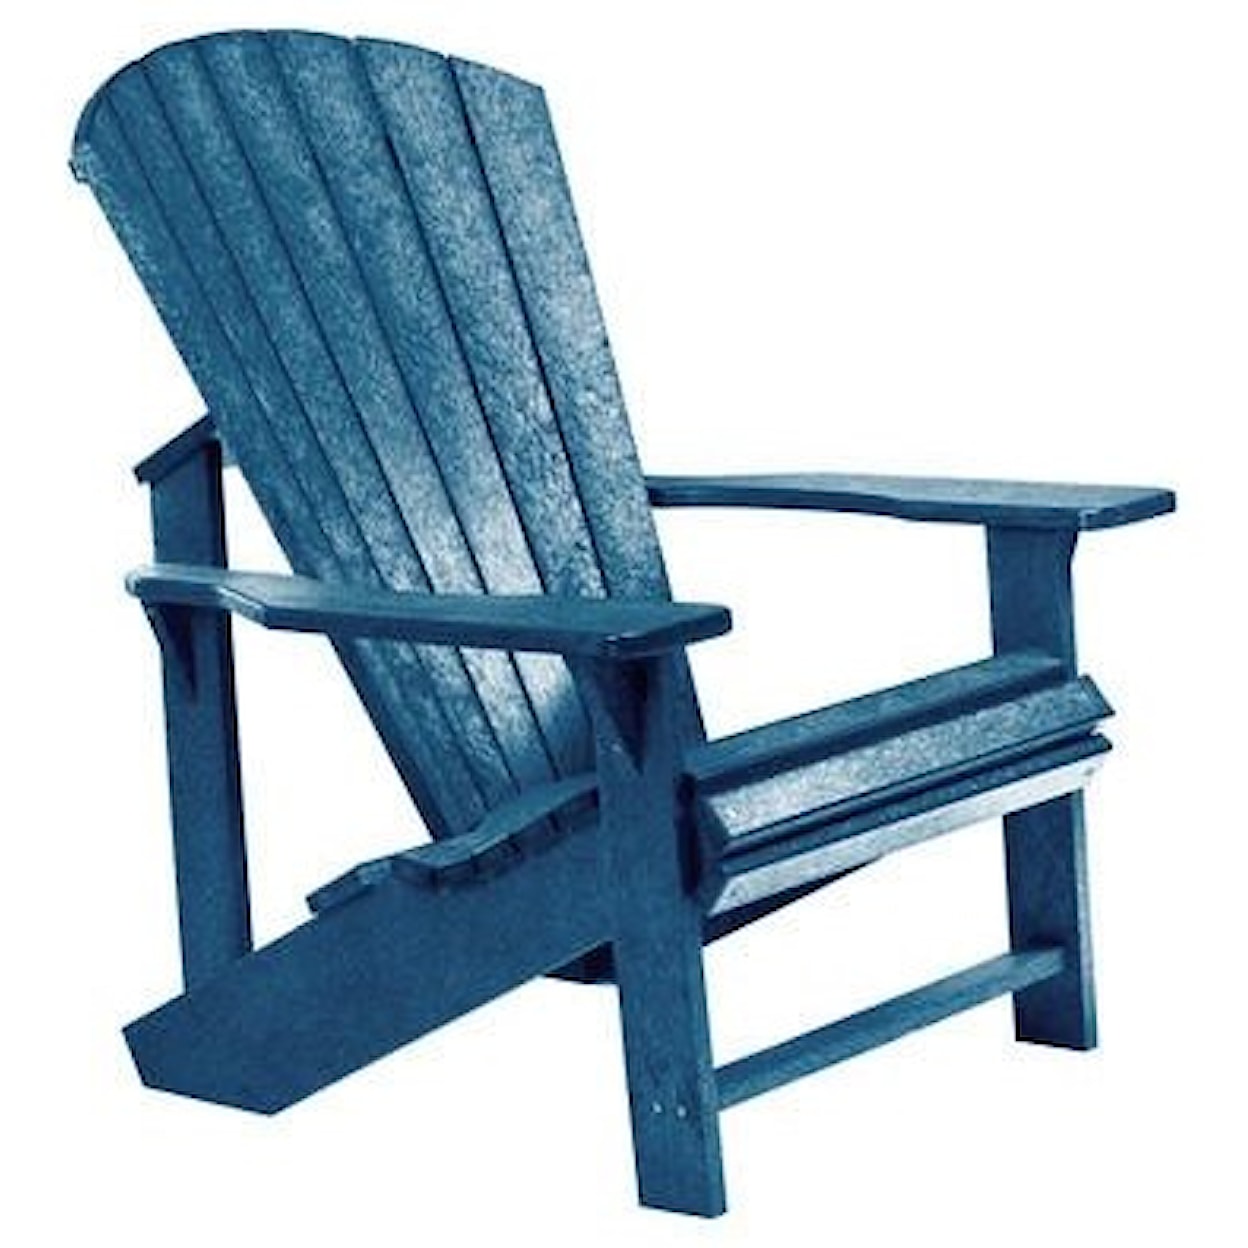 C.R. Plastic Products Generation Line Adirondack Chair